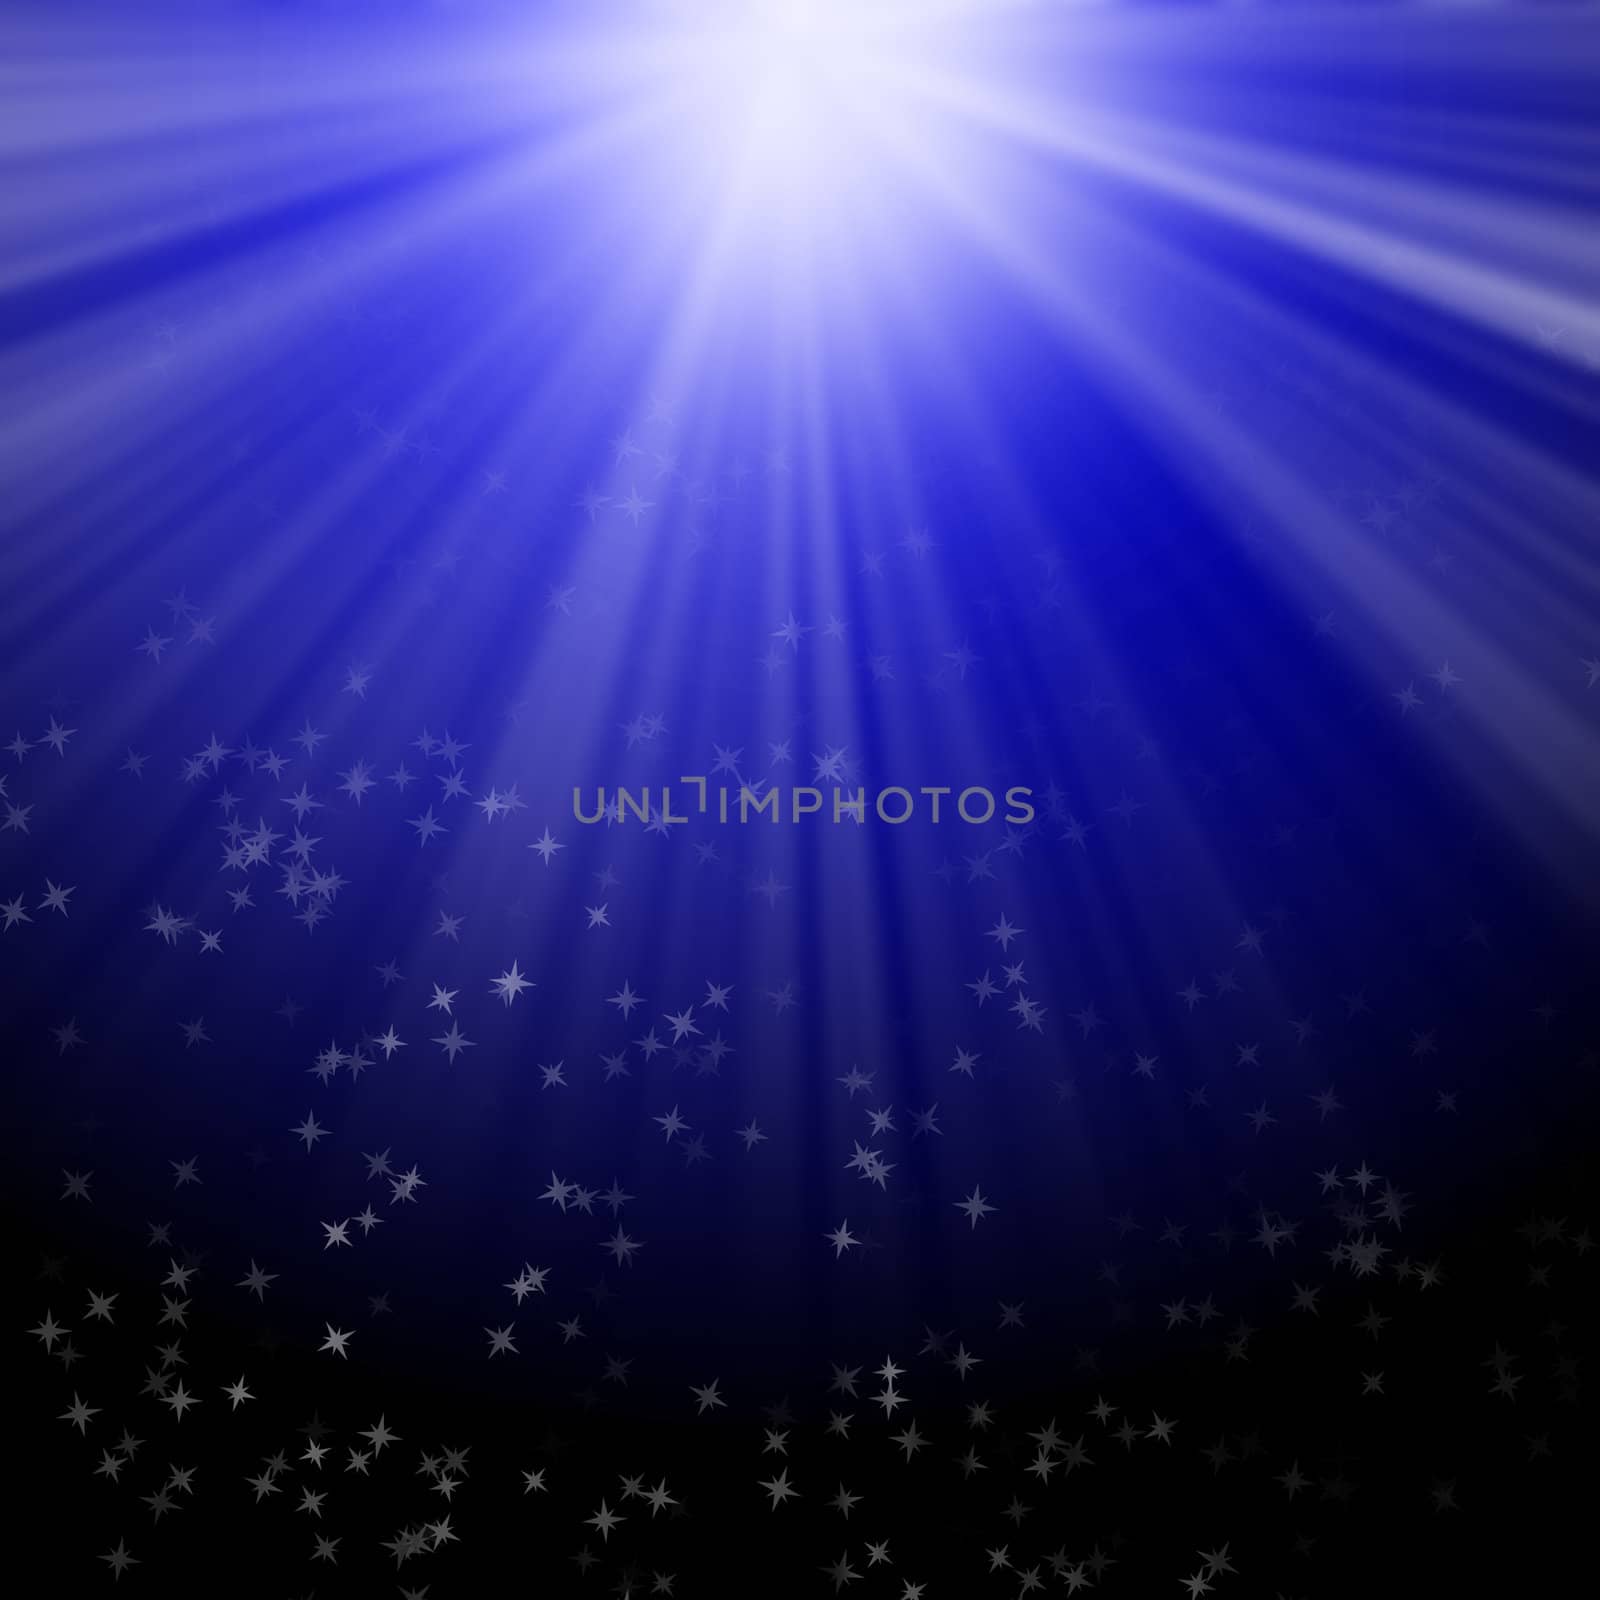 shining stars by phanlop88